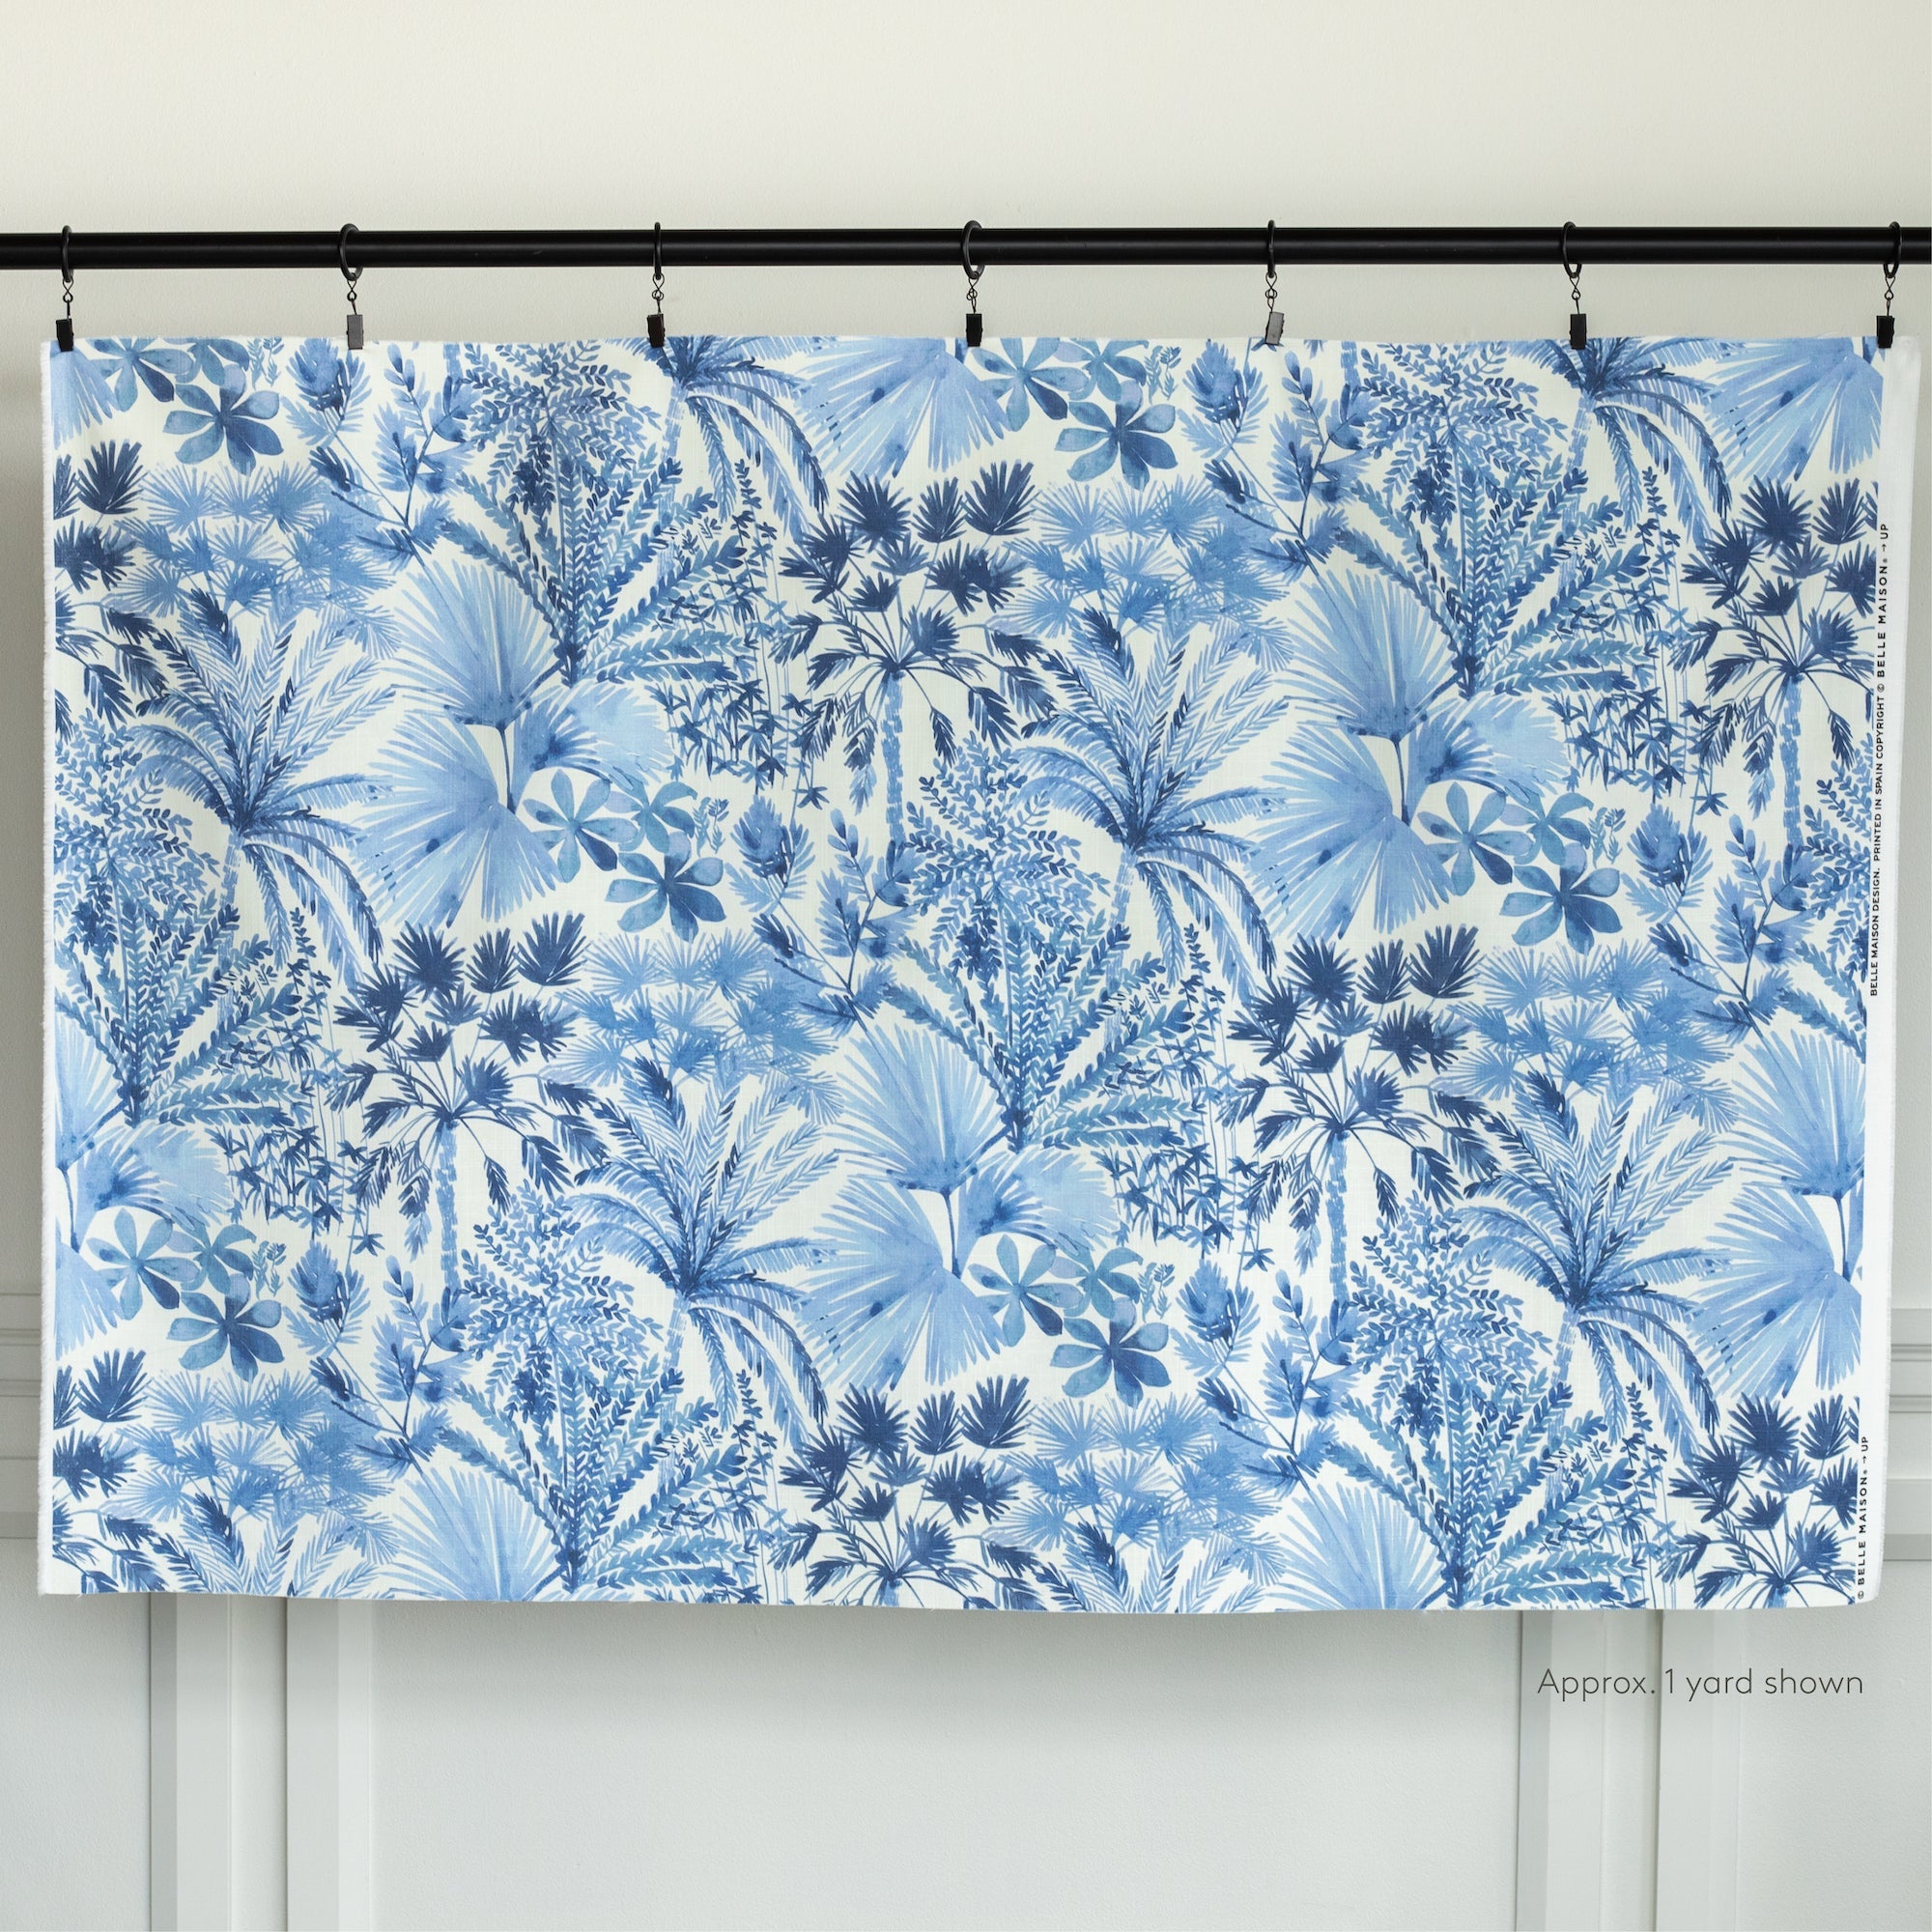 Daintree Azure blue botanical print fabric